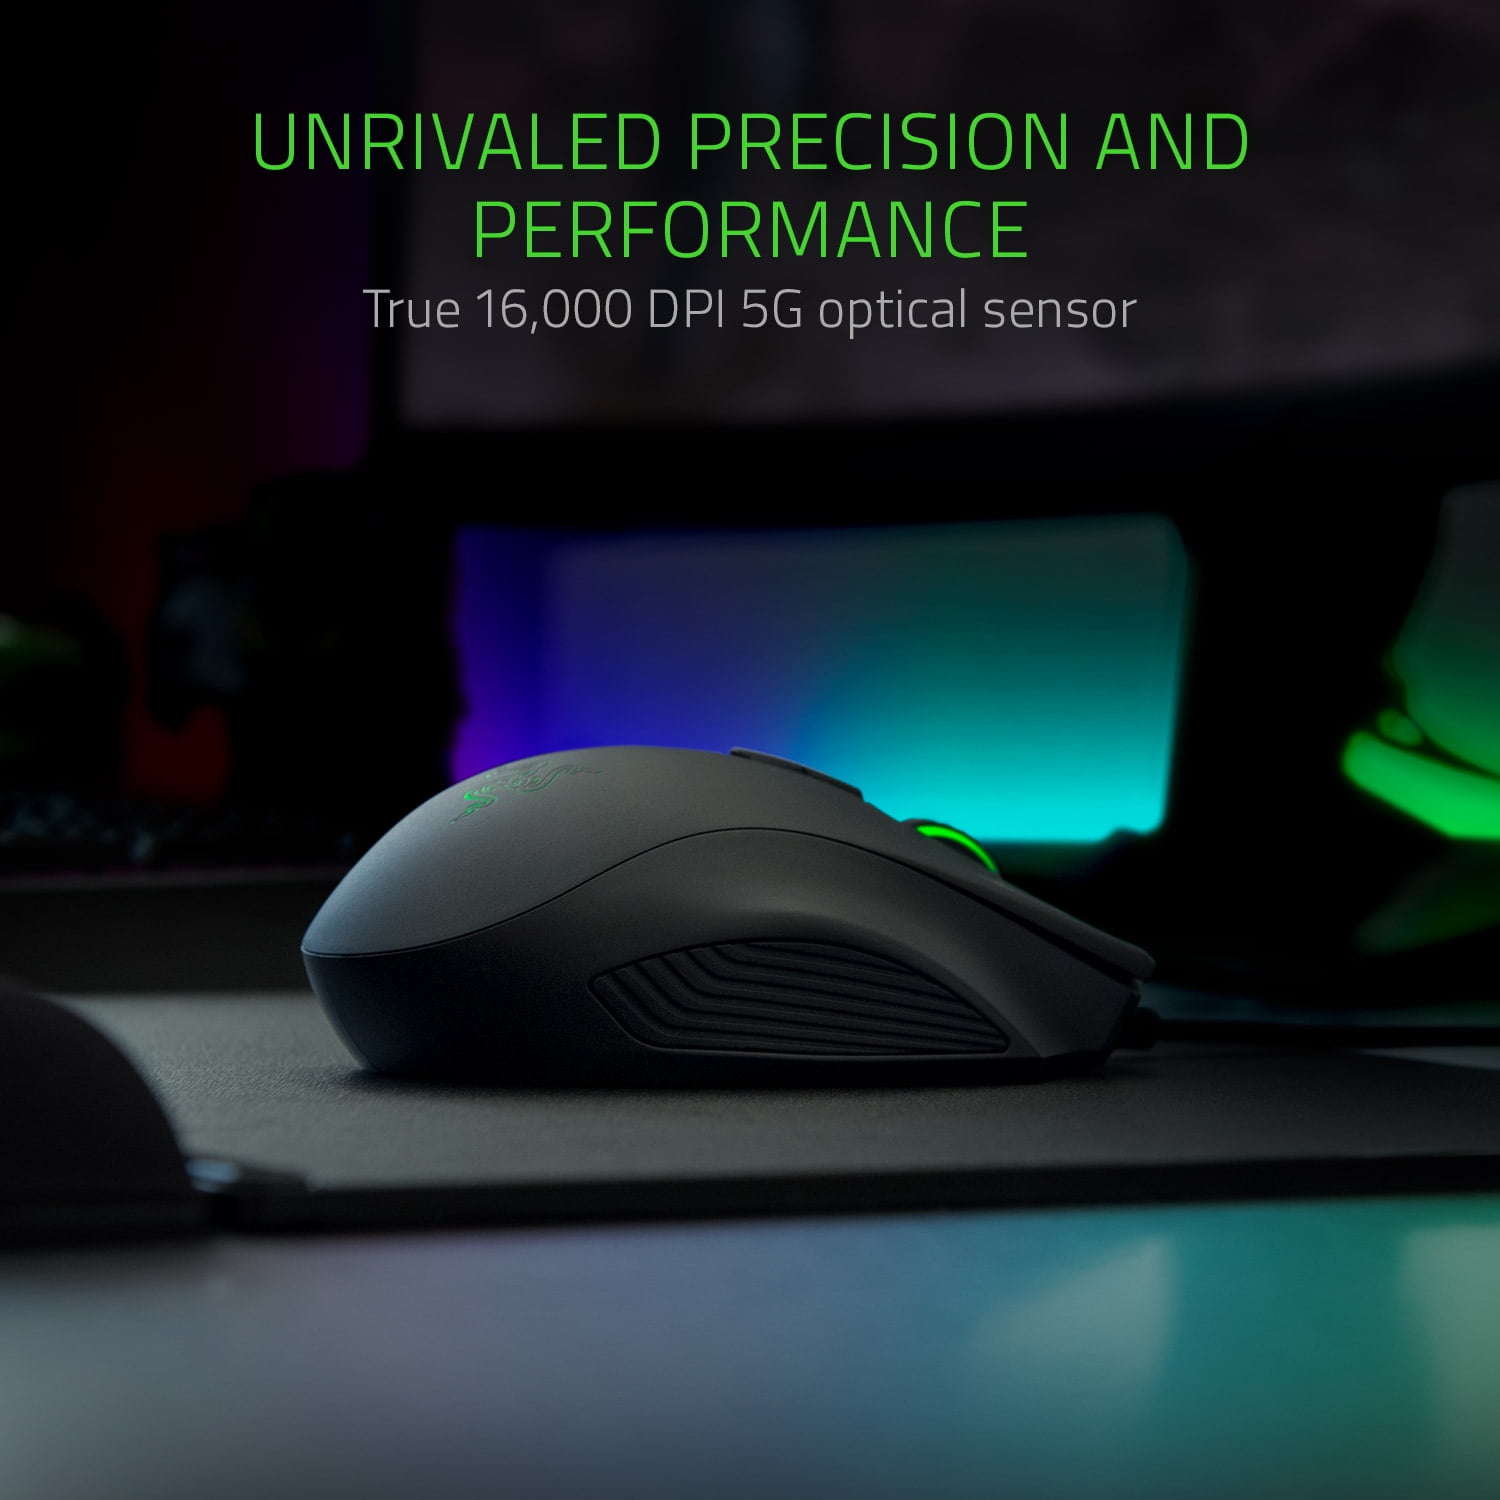 Razer Naga Trinity: RGB Chroma Enable - Gaming Mouse - Walmart.com